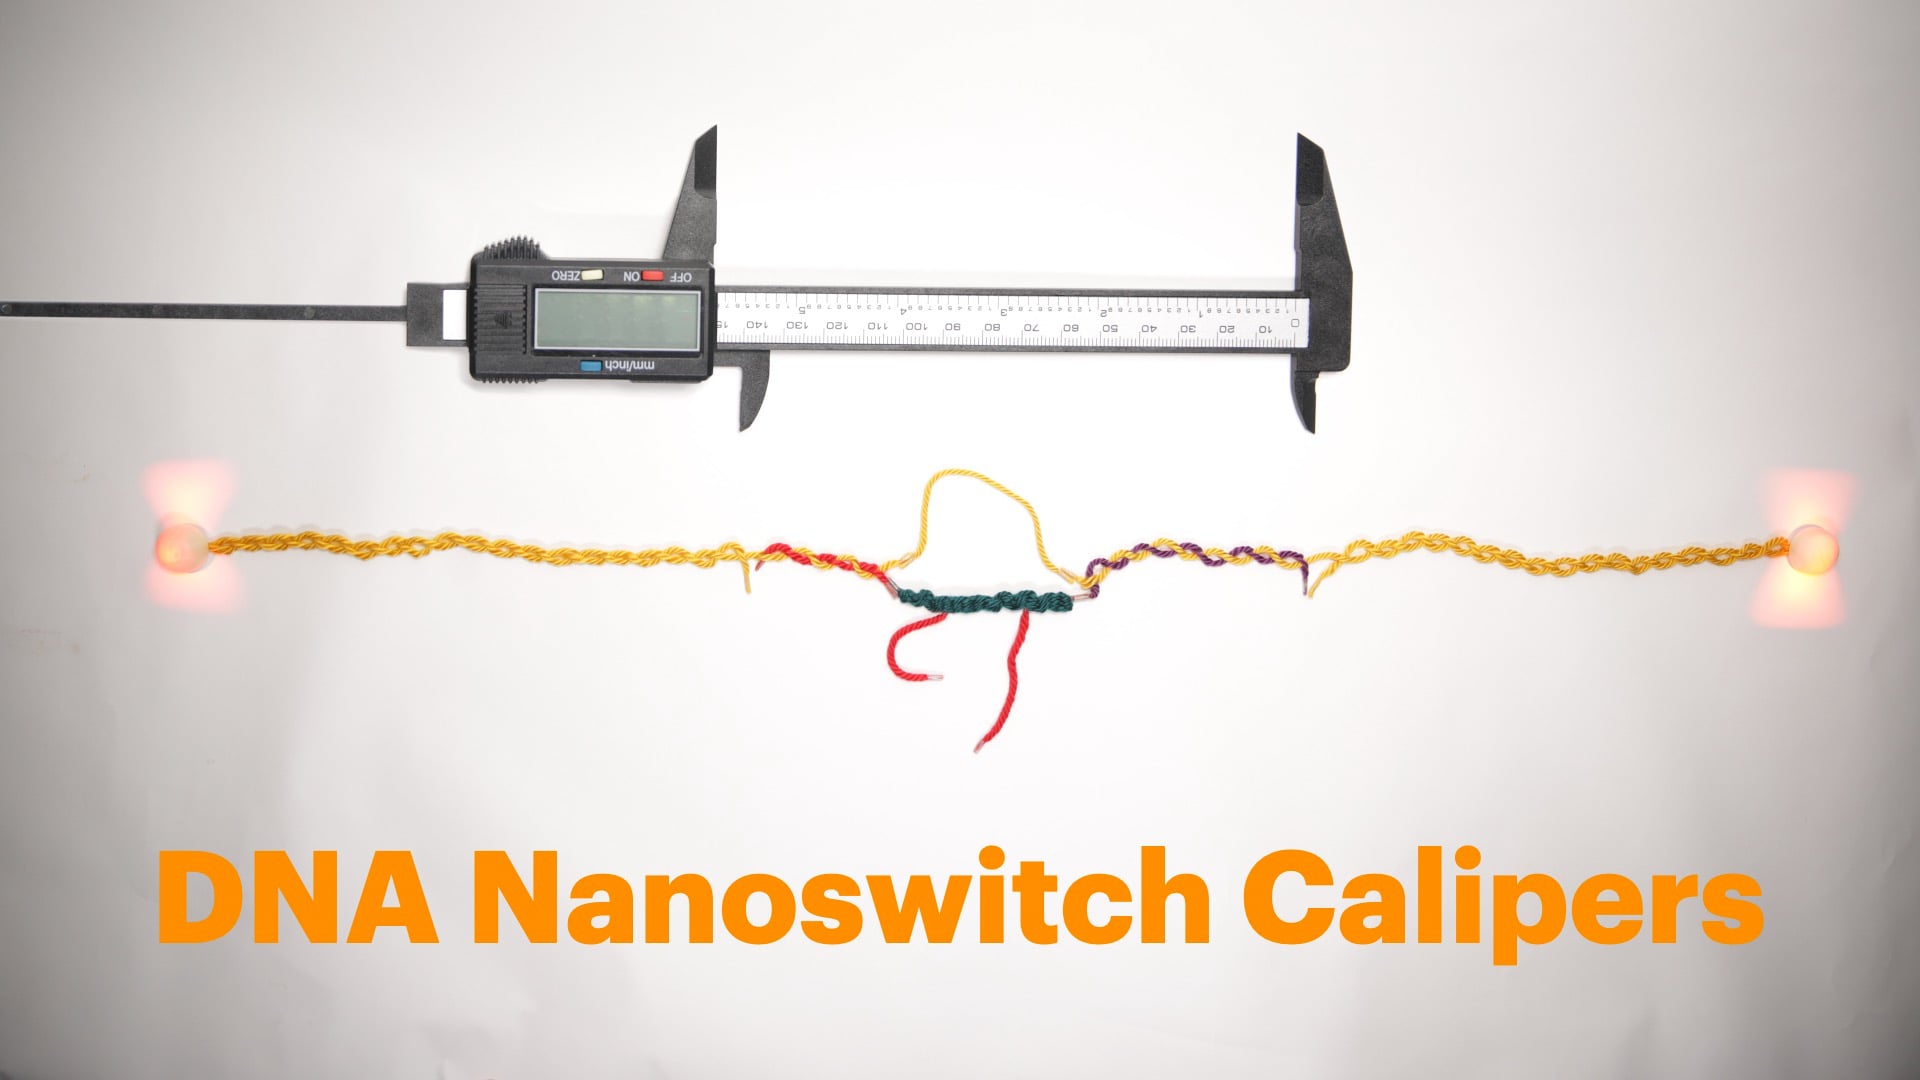 DNA Nanoswitch Calipers